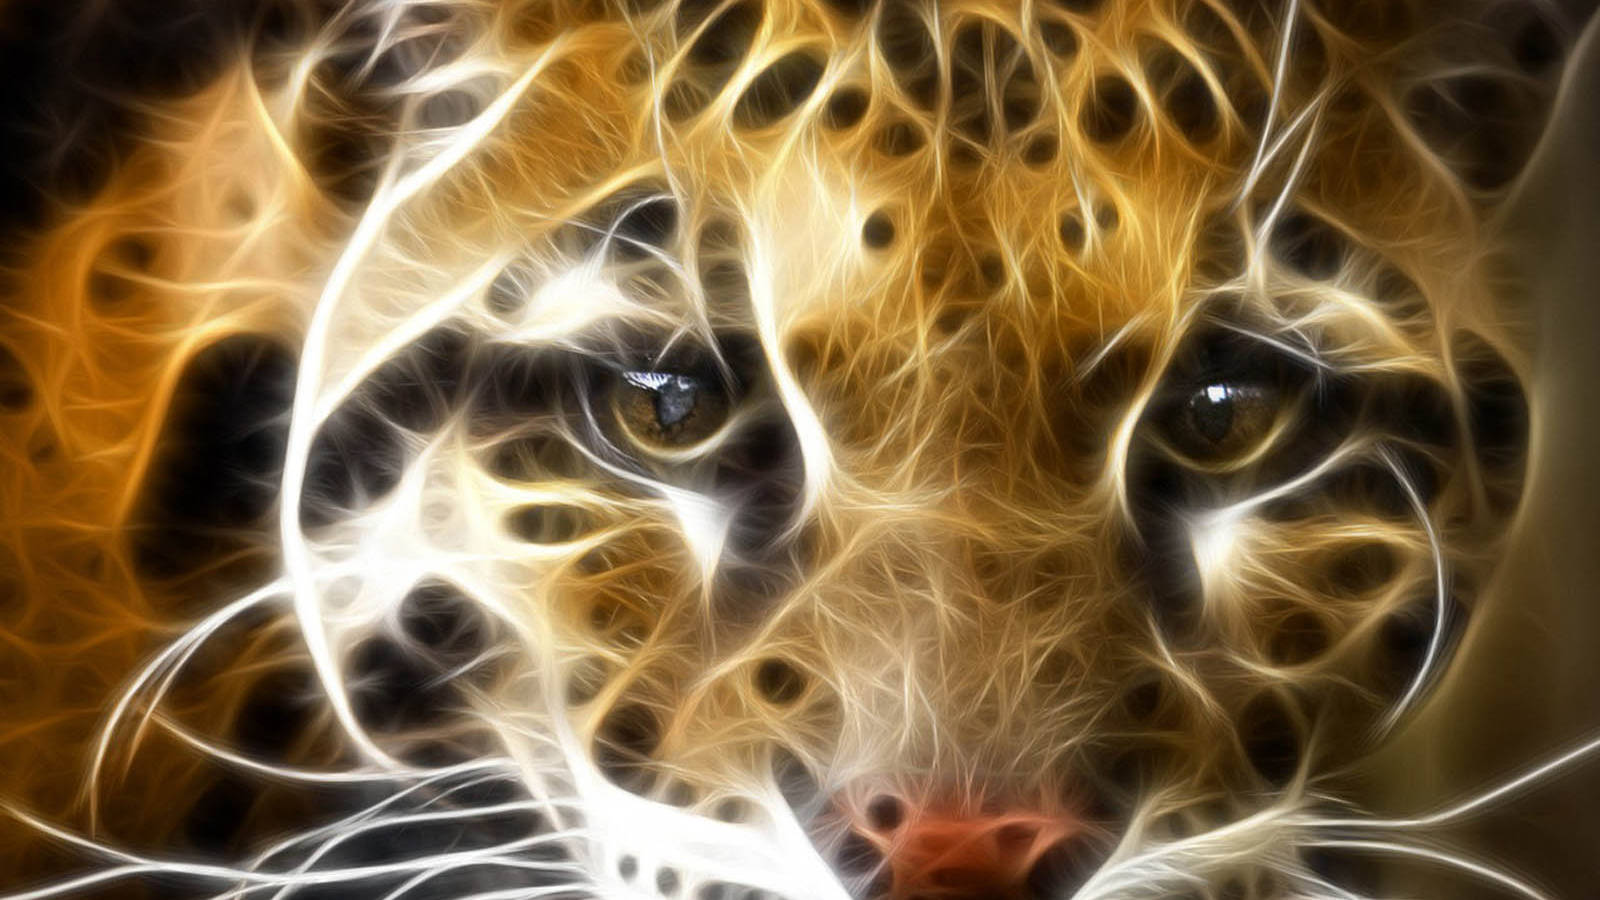 Cool Digital Art Of Young Tiger